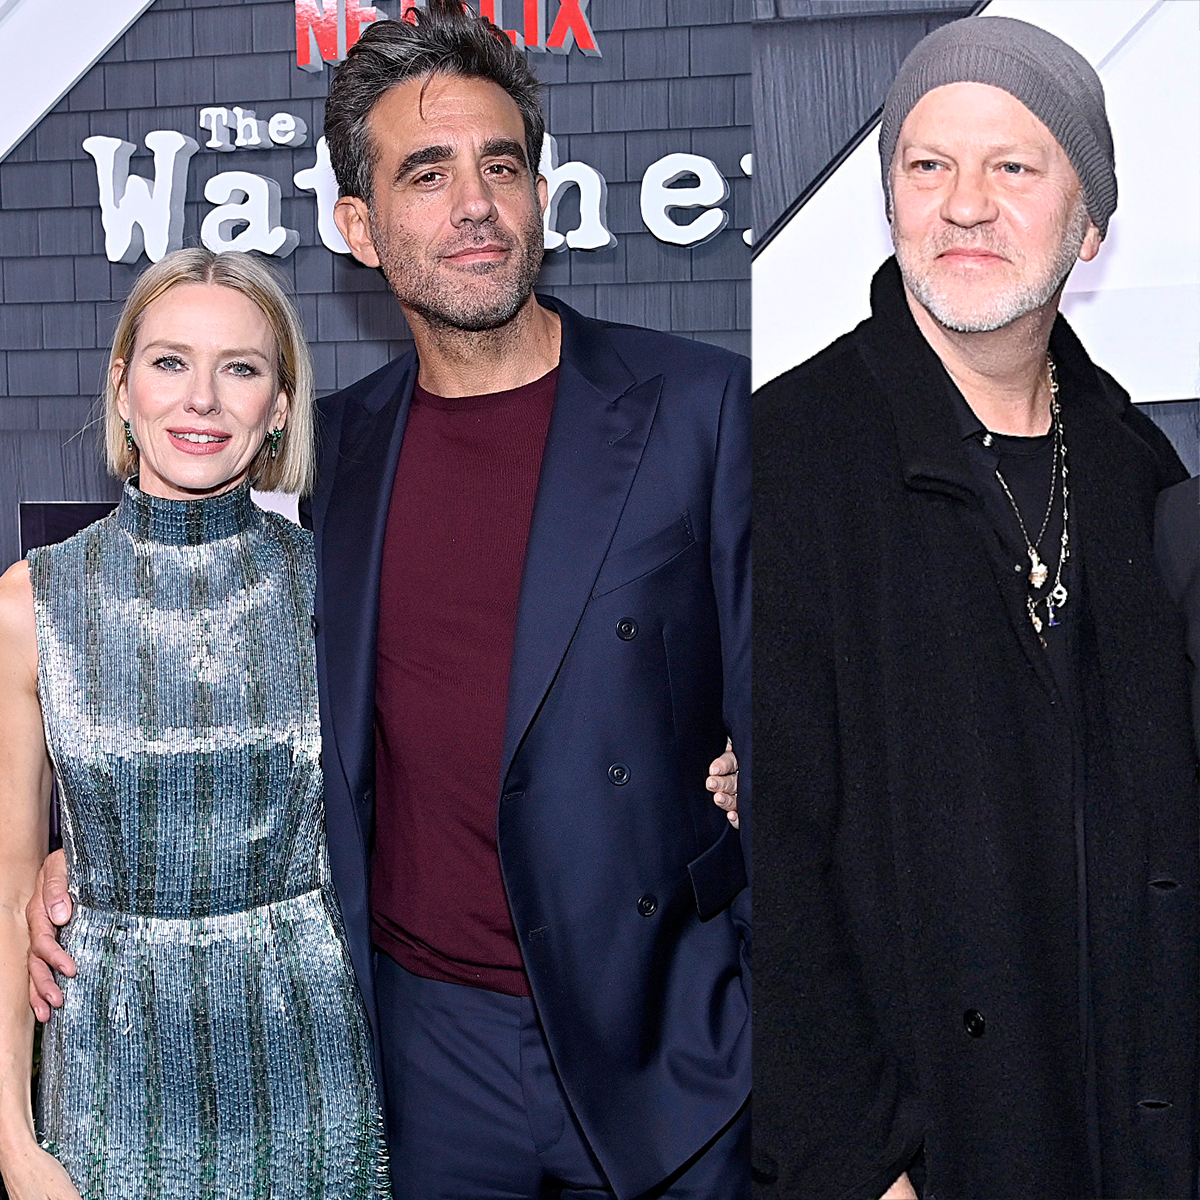 Naomi Watts, Bobby Cannavale on Netflix's The Watcher Based on